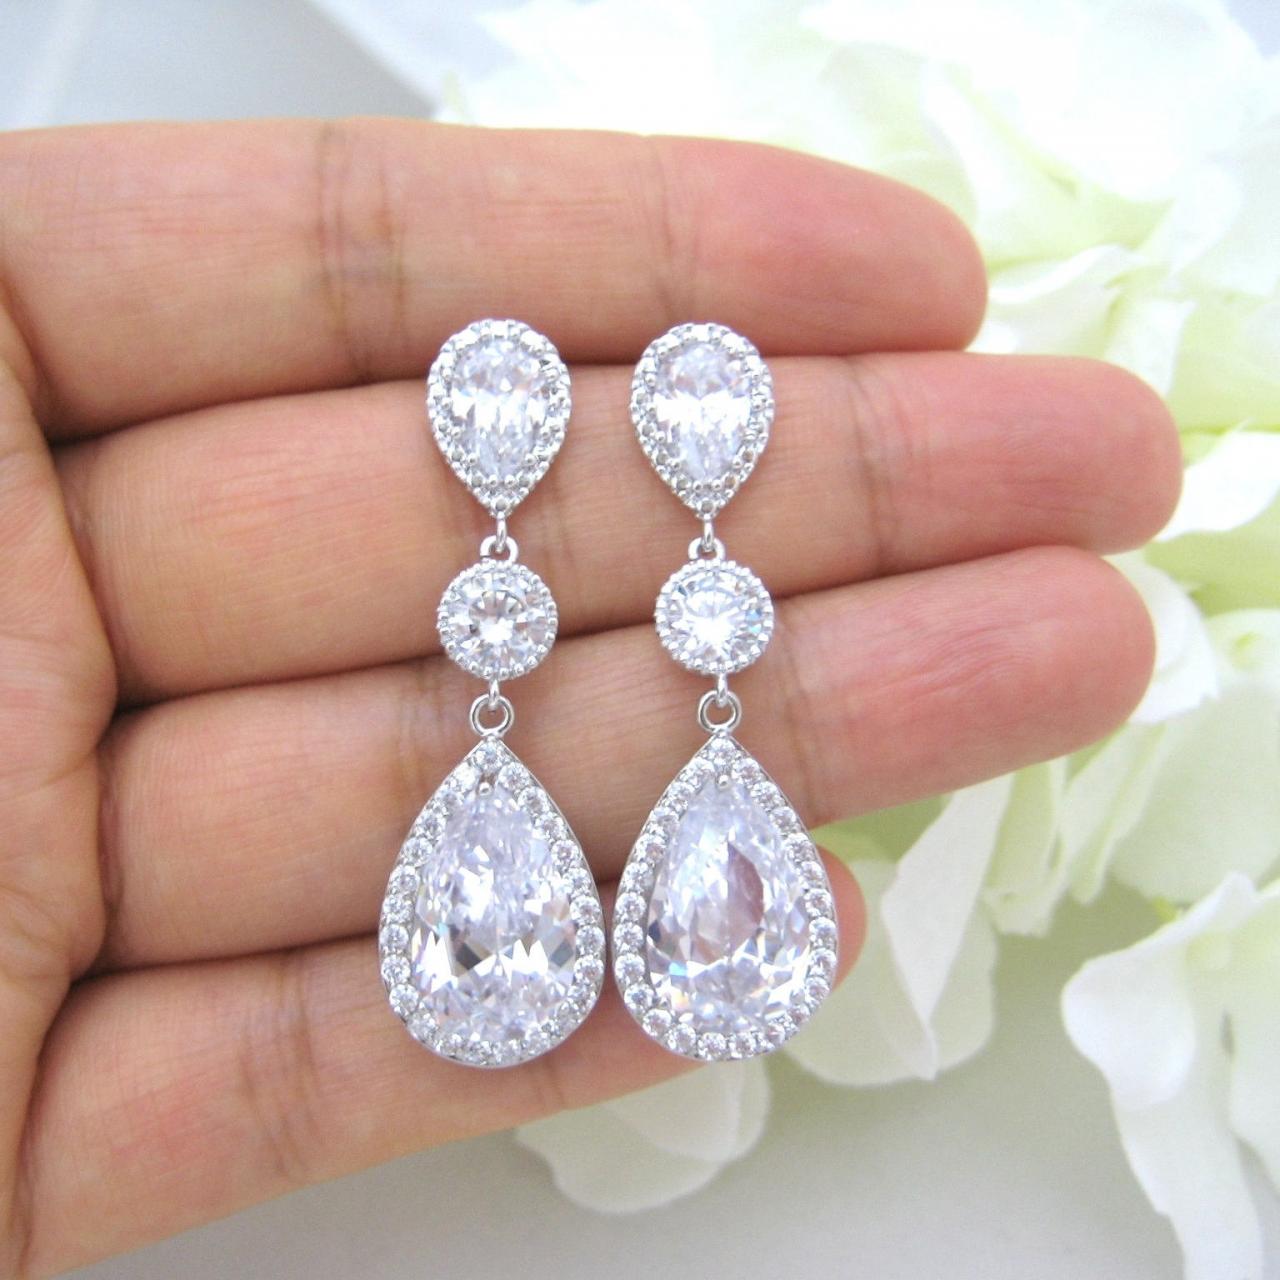 Bridal Crystal Earrings Wedding Earrings Cubic Zirconia Teardrop Earrings Bridesmaids Gift Long Bridal Earrings (e006)